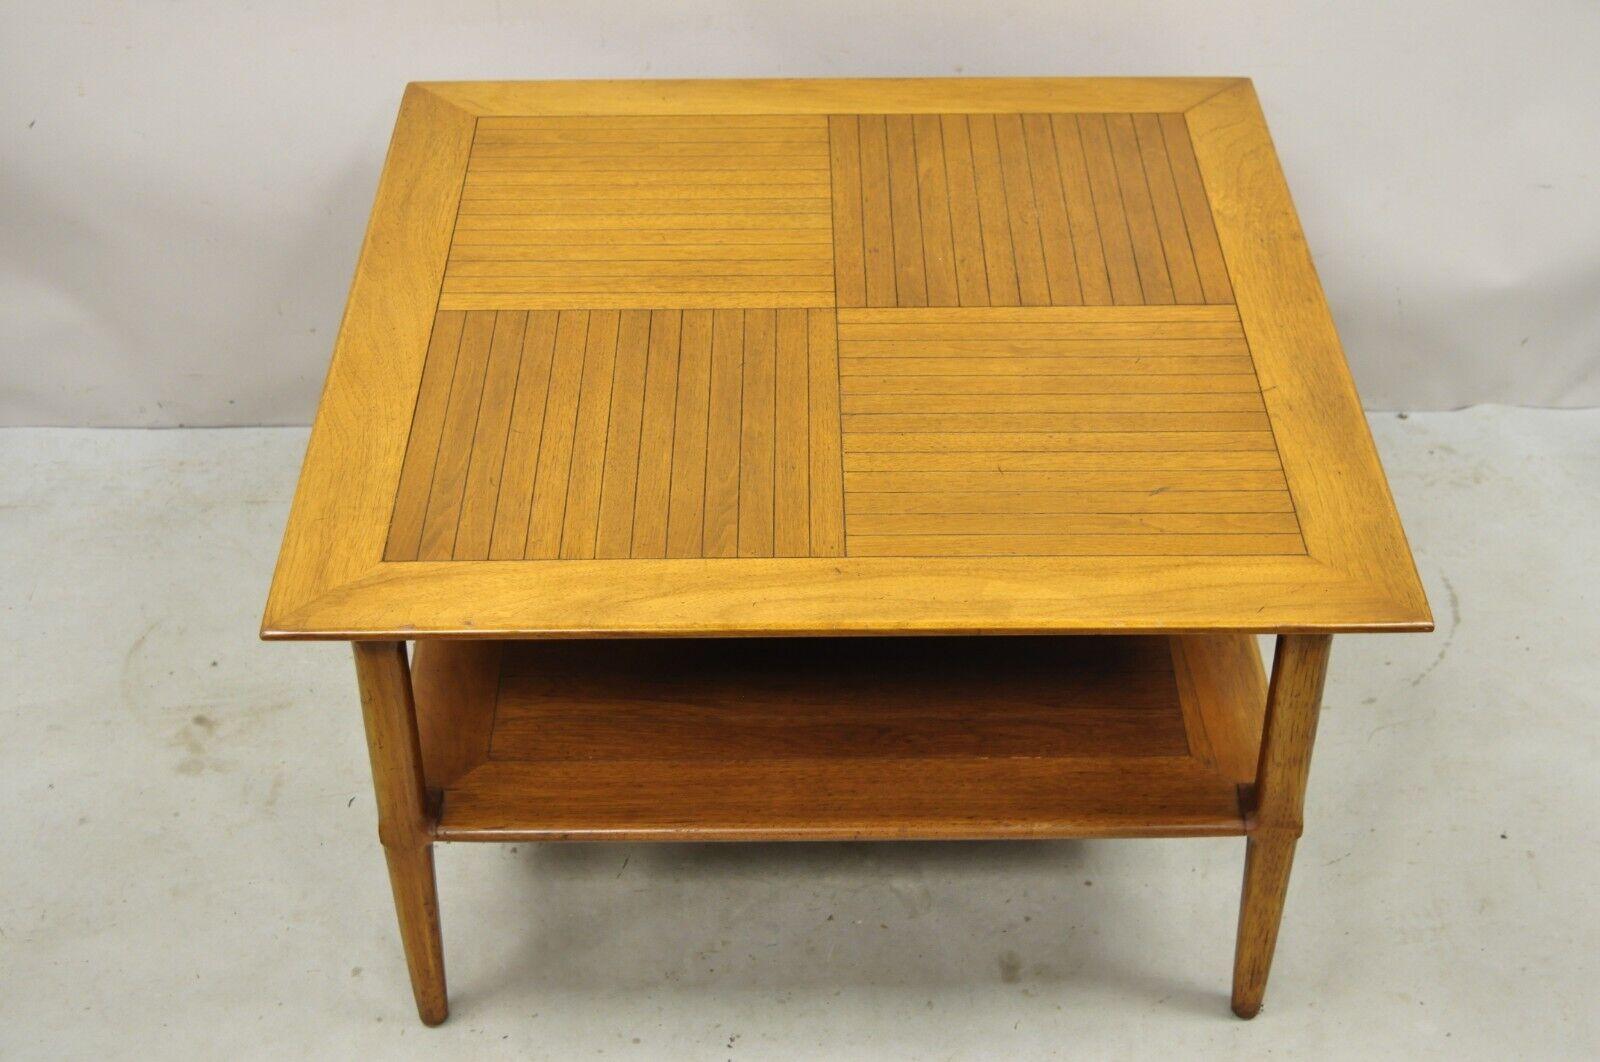 Vintage Tomlinson Sophisticate Square Walnut Mid Century Modern Lamp Side Table. Circa Mid 20th Century. Measurements: 19